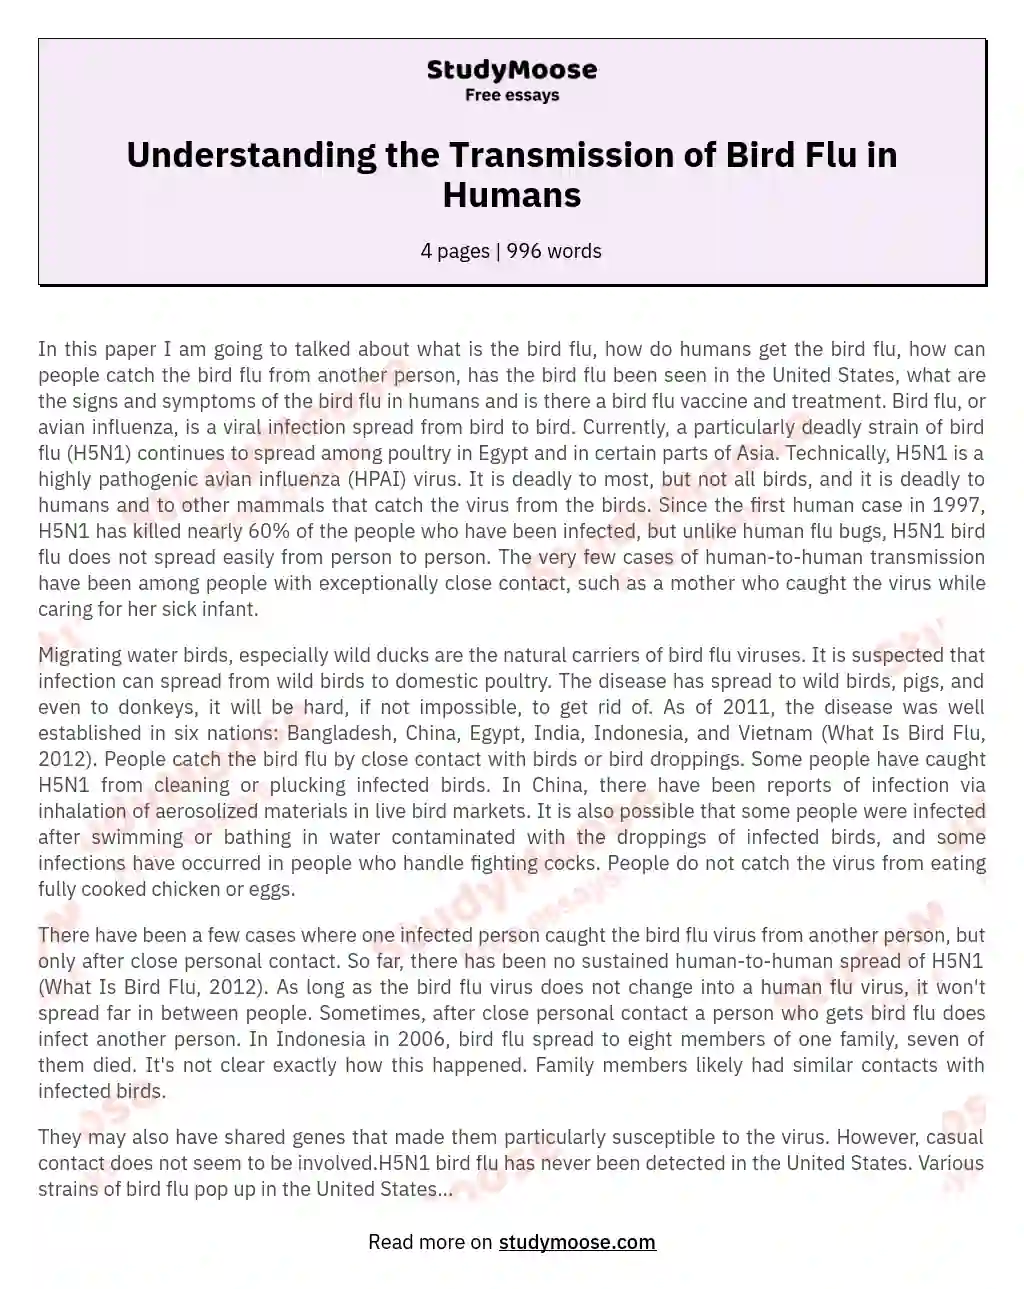 Understanding the Transmission of Bird Flu in Humans essay